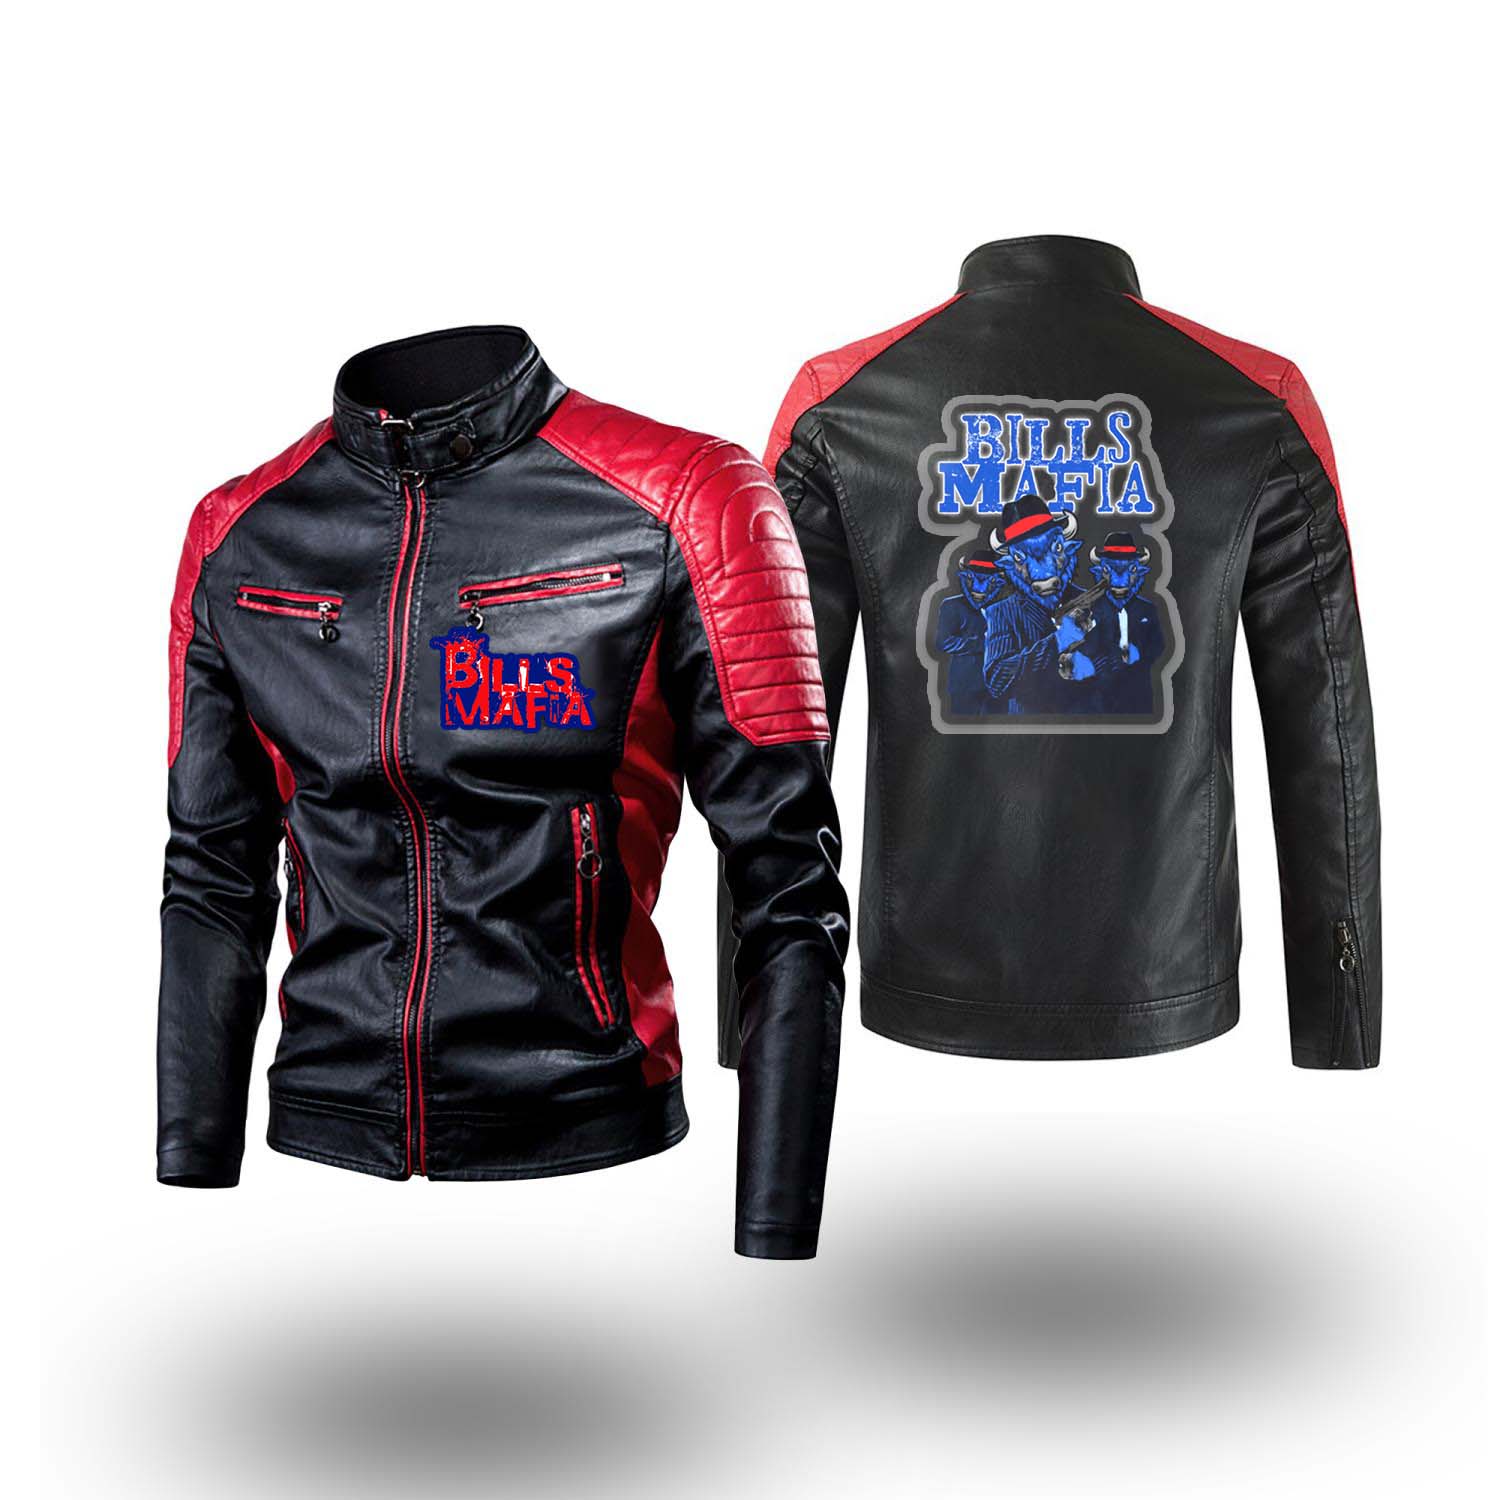 Buffalo-Bills-nfl-the-billsmafia-logo-Classic-Biker-Leather-Jacket-v1